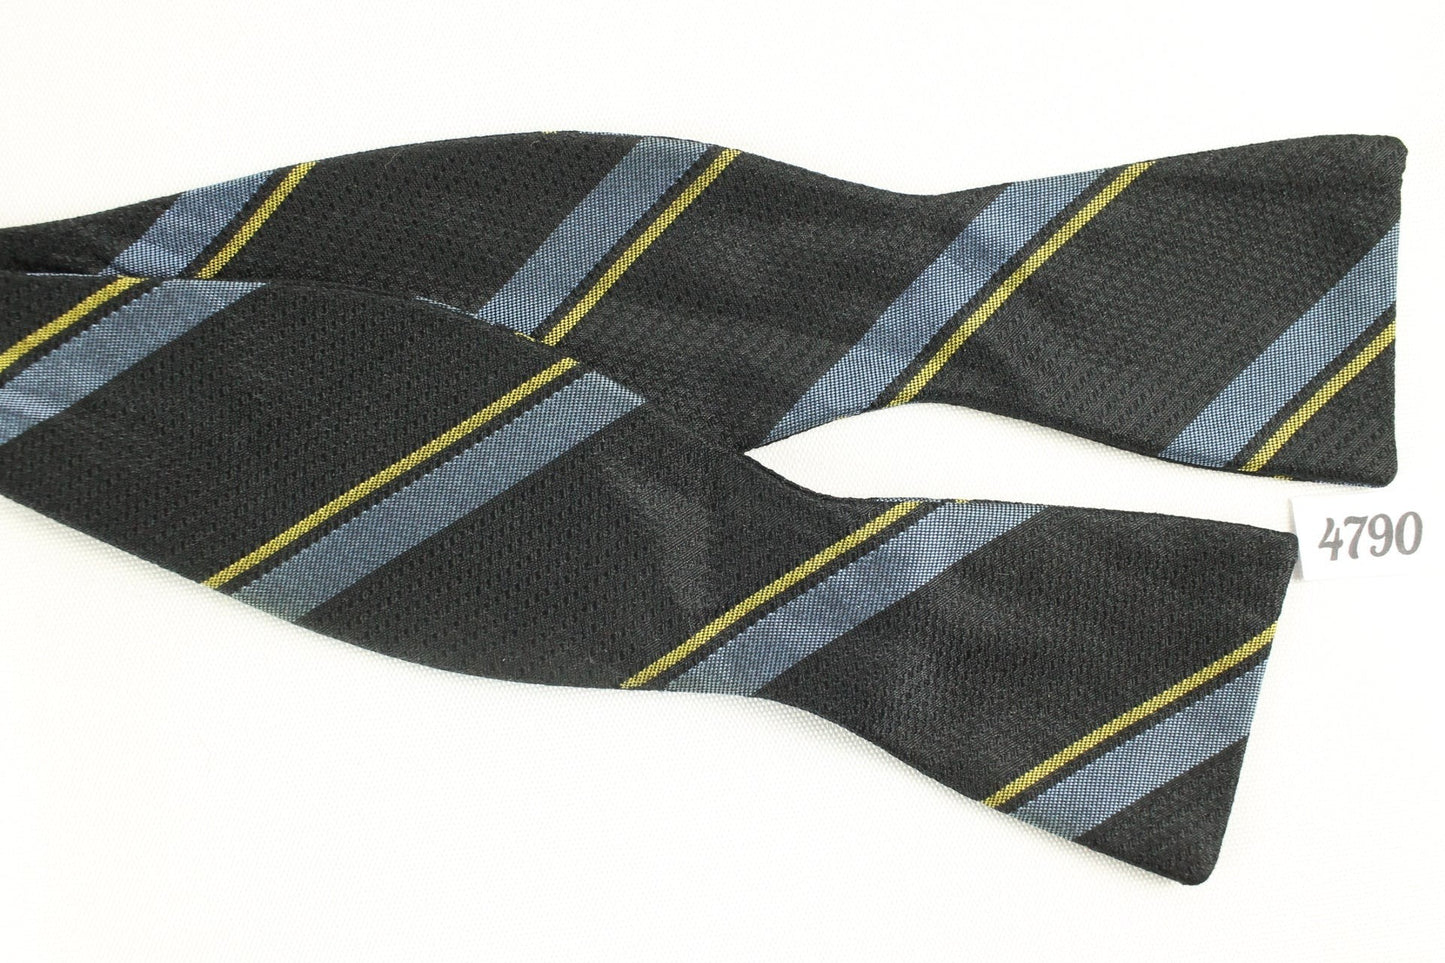 Vintage self tie thistle end 40% silk mix black blue gold striped bow tie adjustable